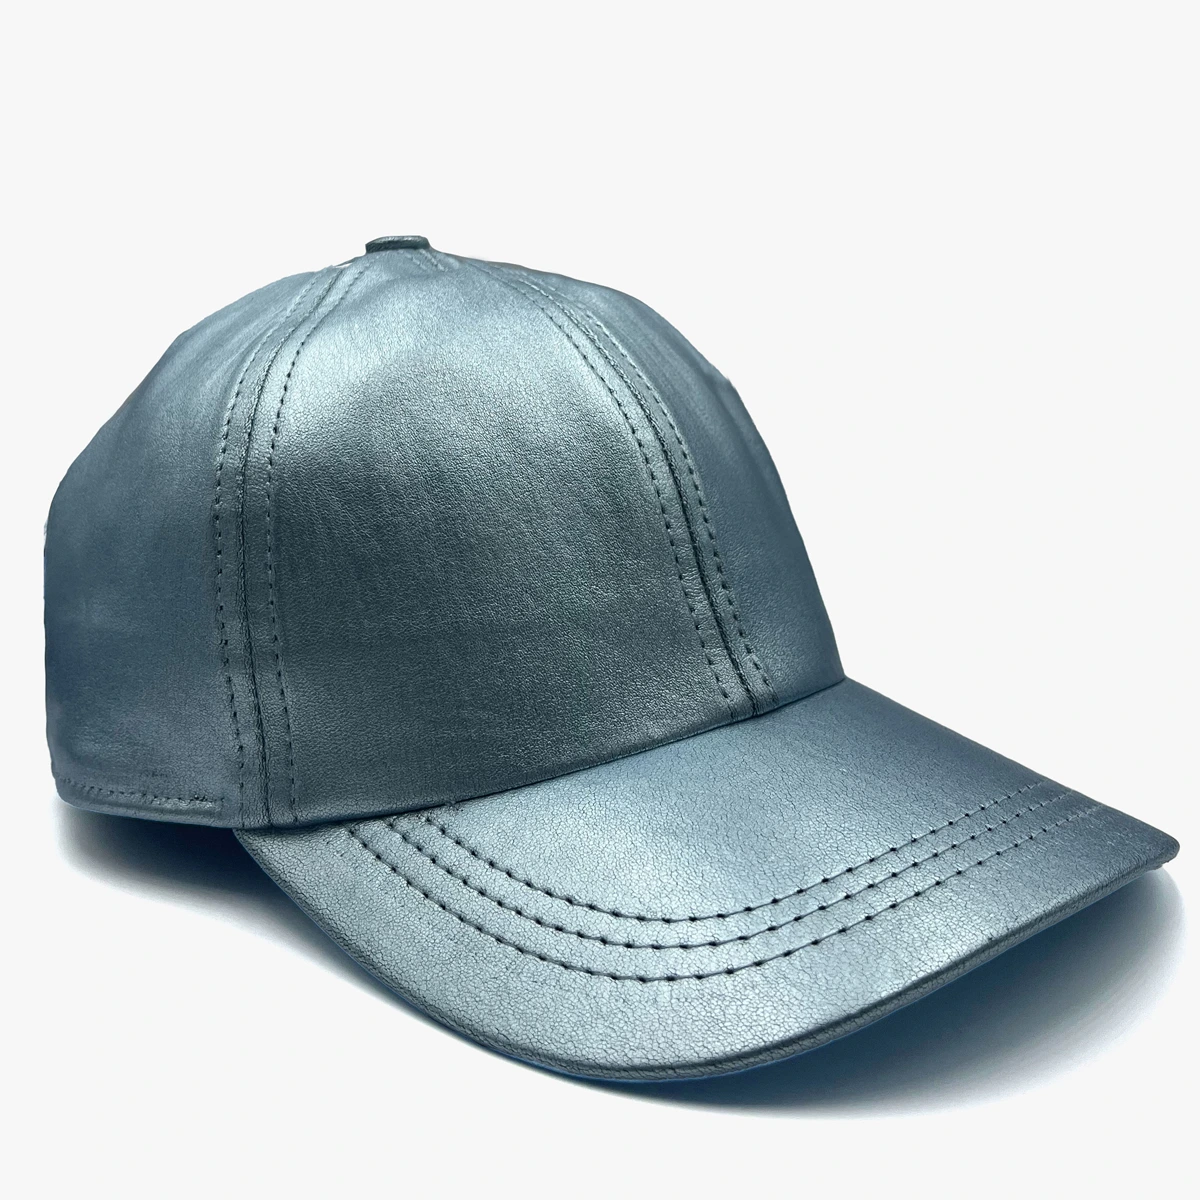 hat blue metallique jitrois